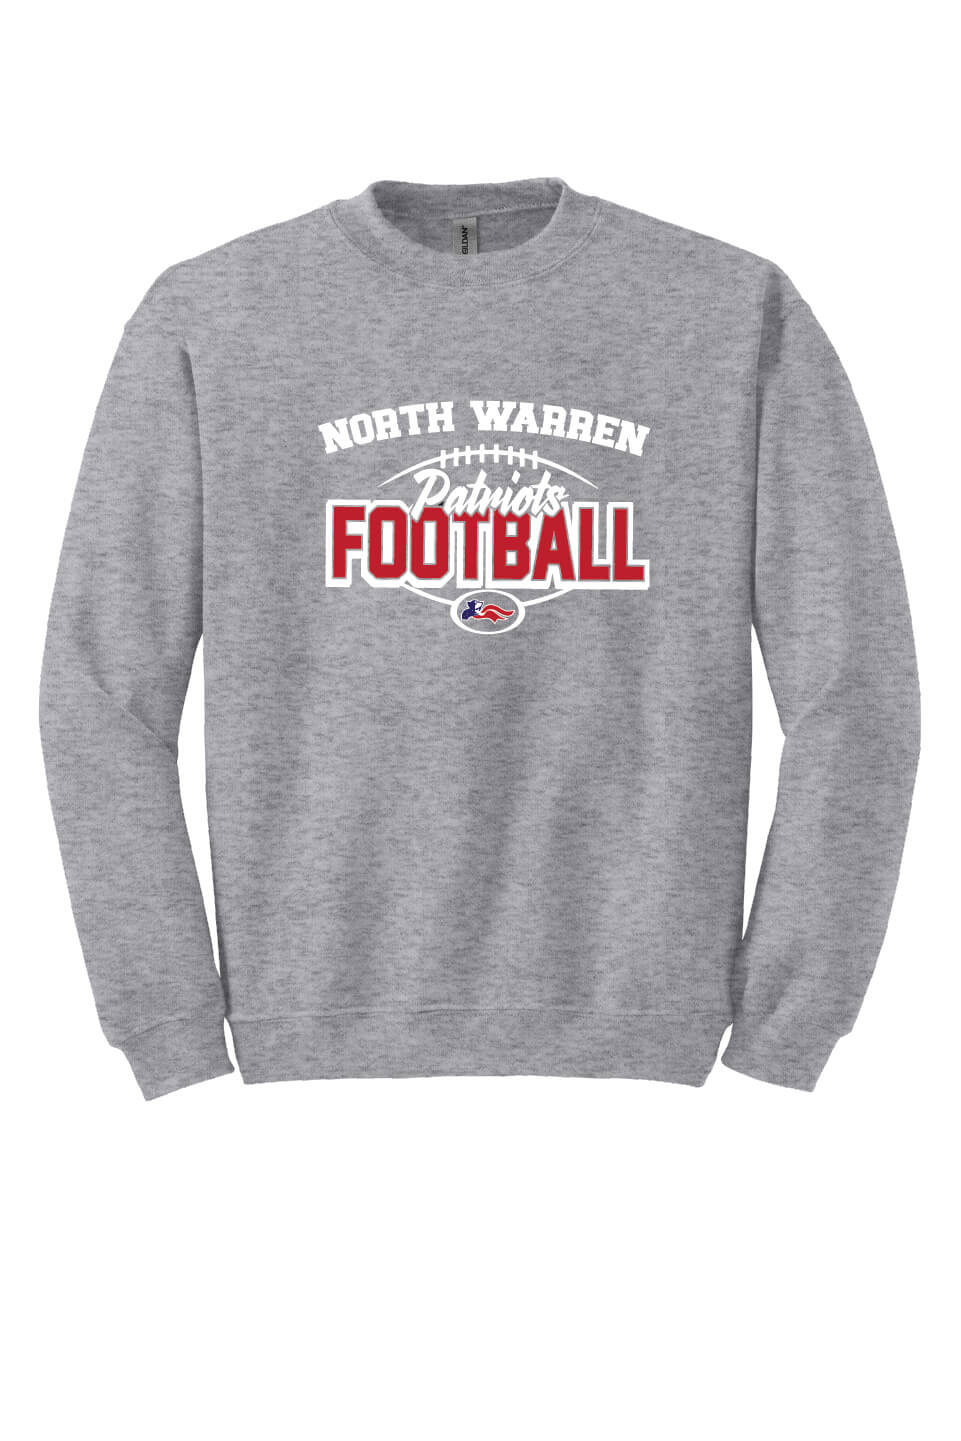 NW Patriots Football Crewneck Sweatshirt gray